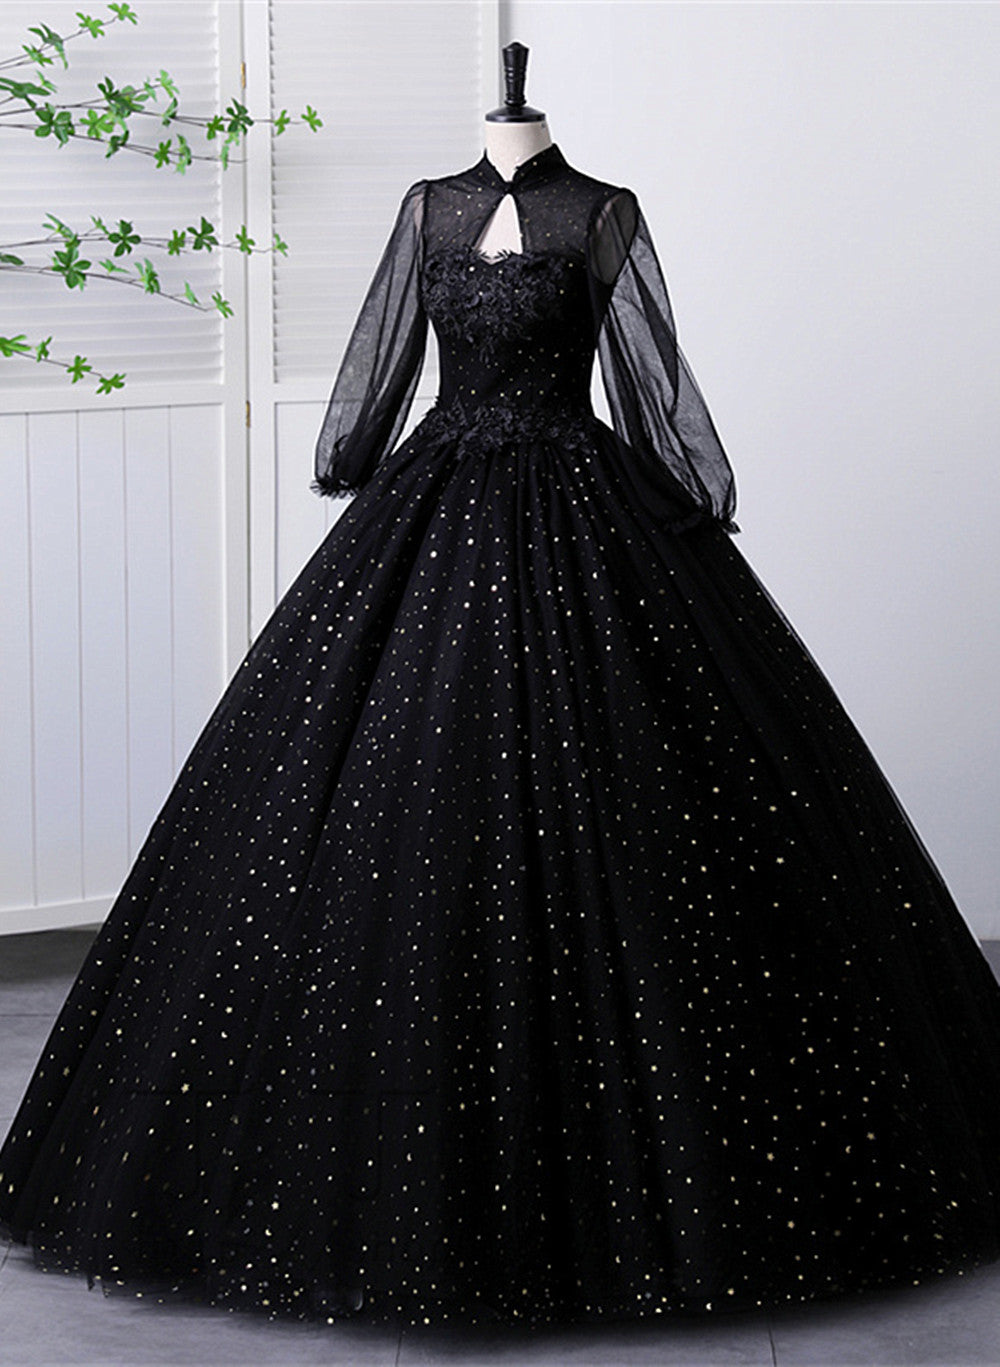 Black High Neckline Long Sleeves Tulle Sweet 16 Dress, Black Ball Gown Formal Dress